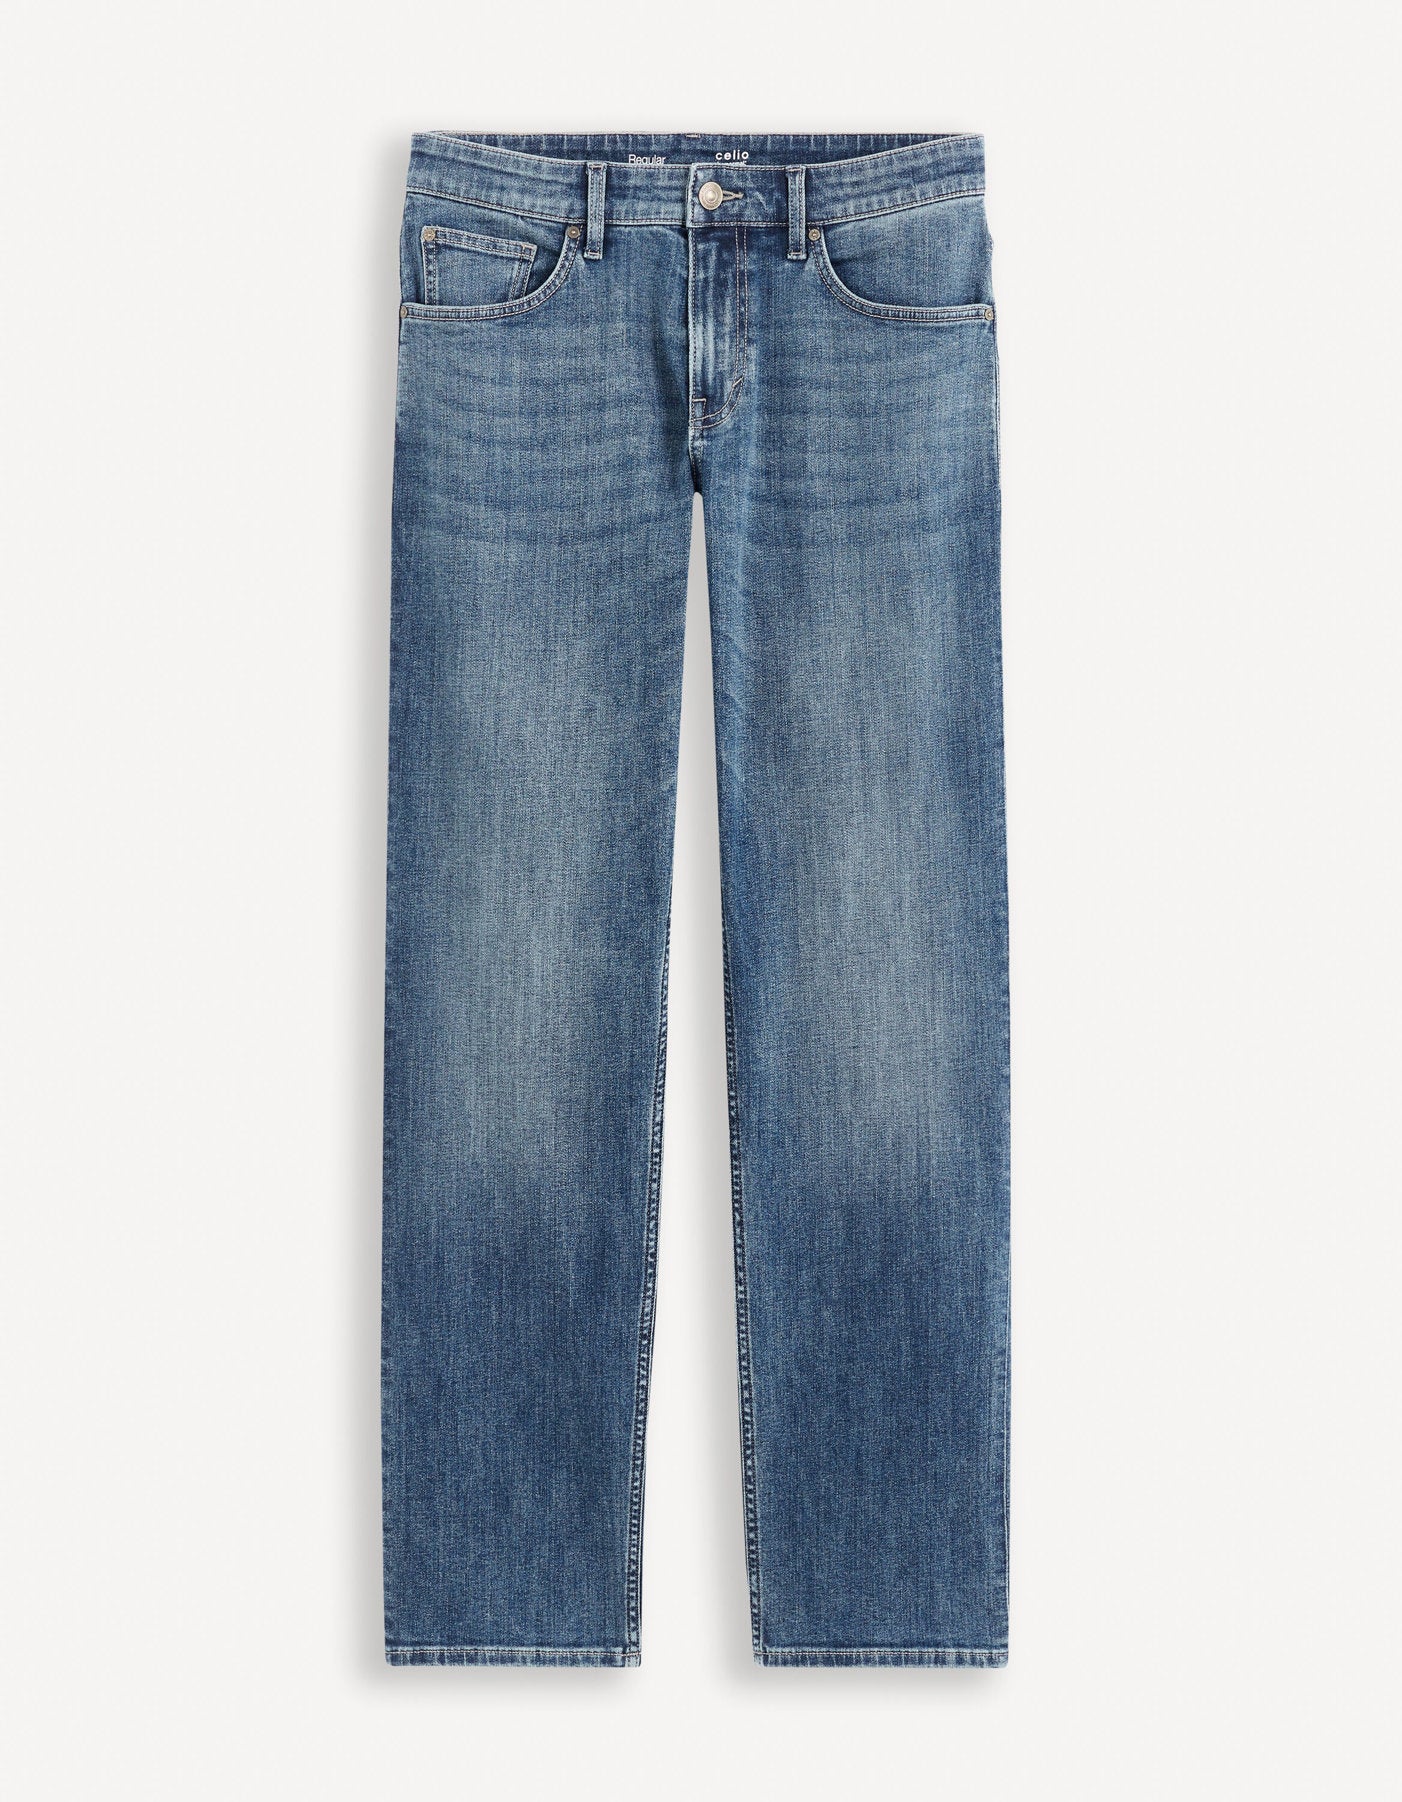 Regular C5 3-Length Stretch Jeans_FORUM5_STONE_02